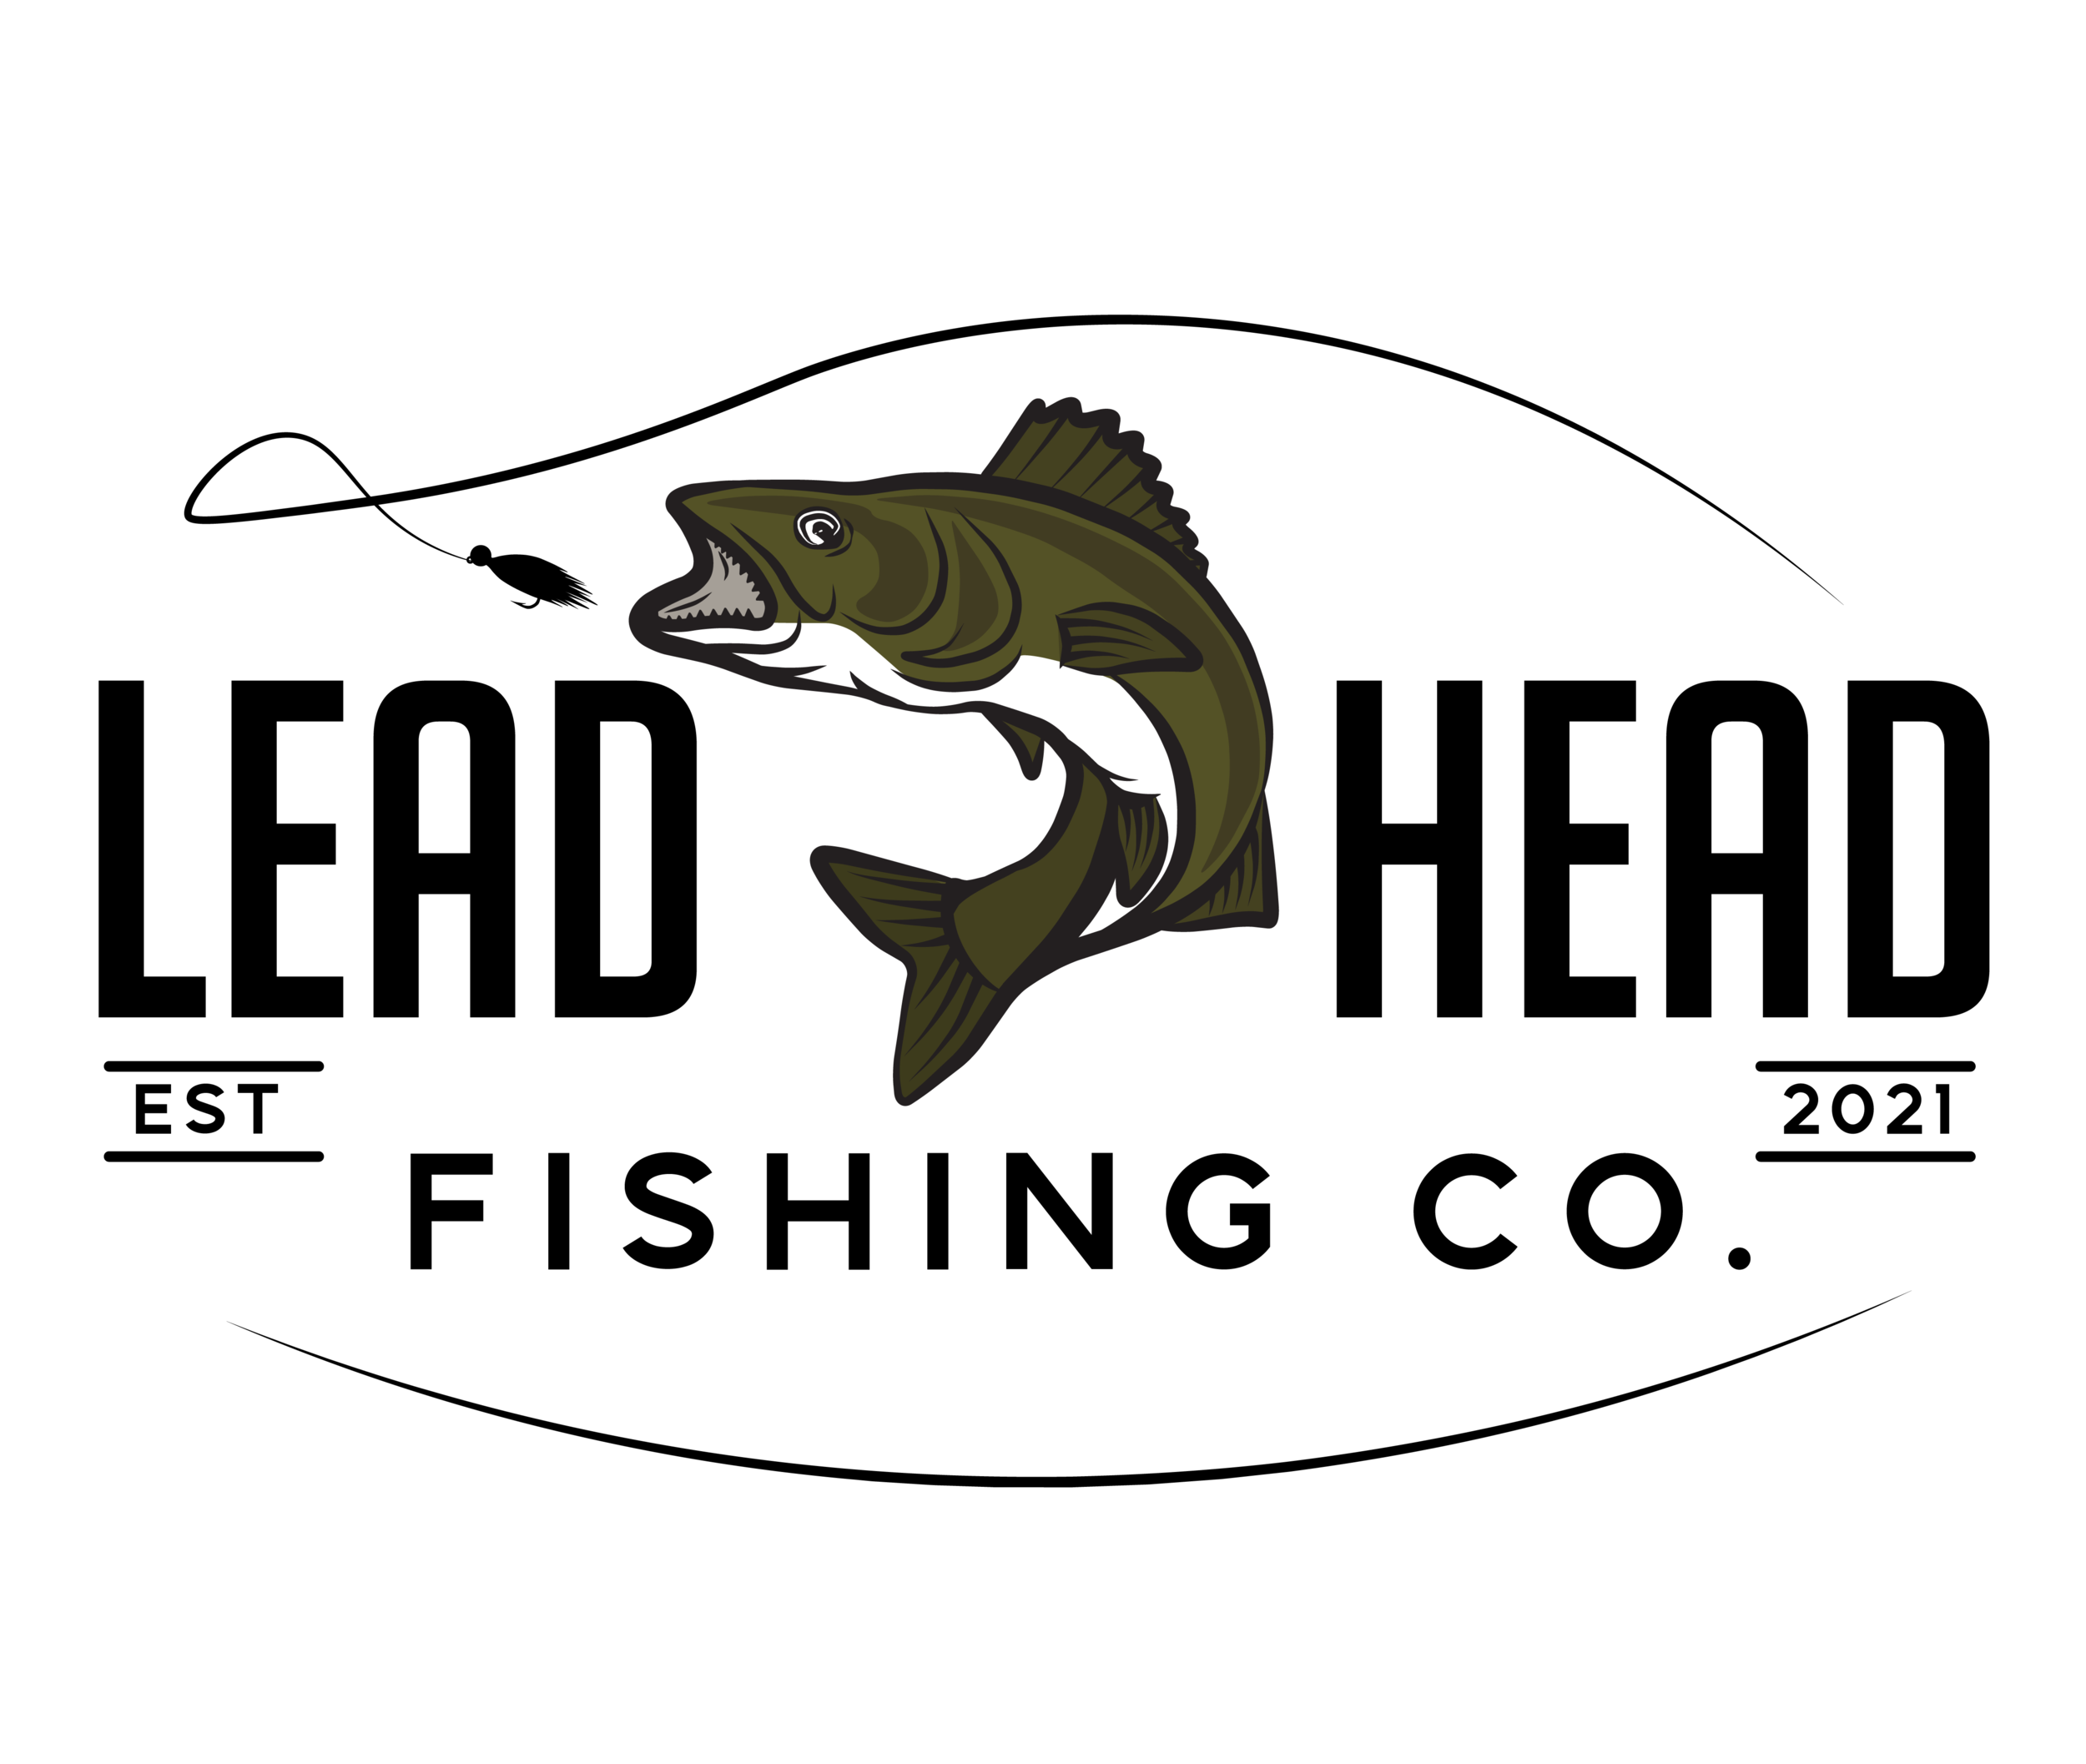 LeadHead Fishing Co.